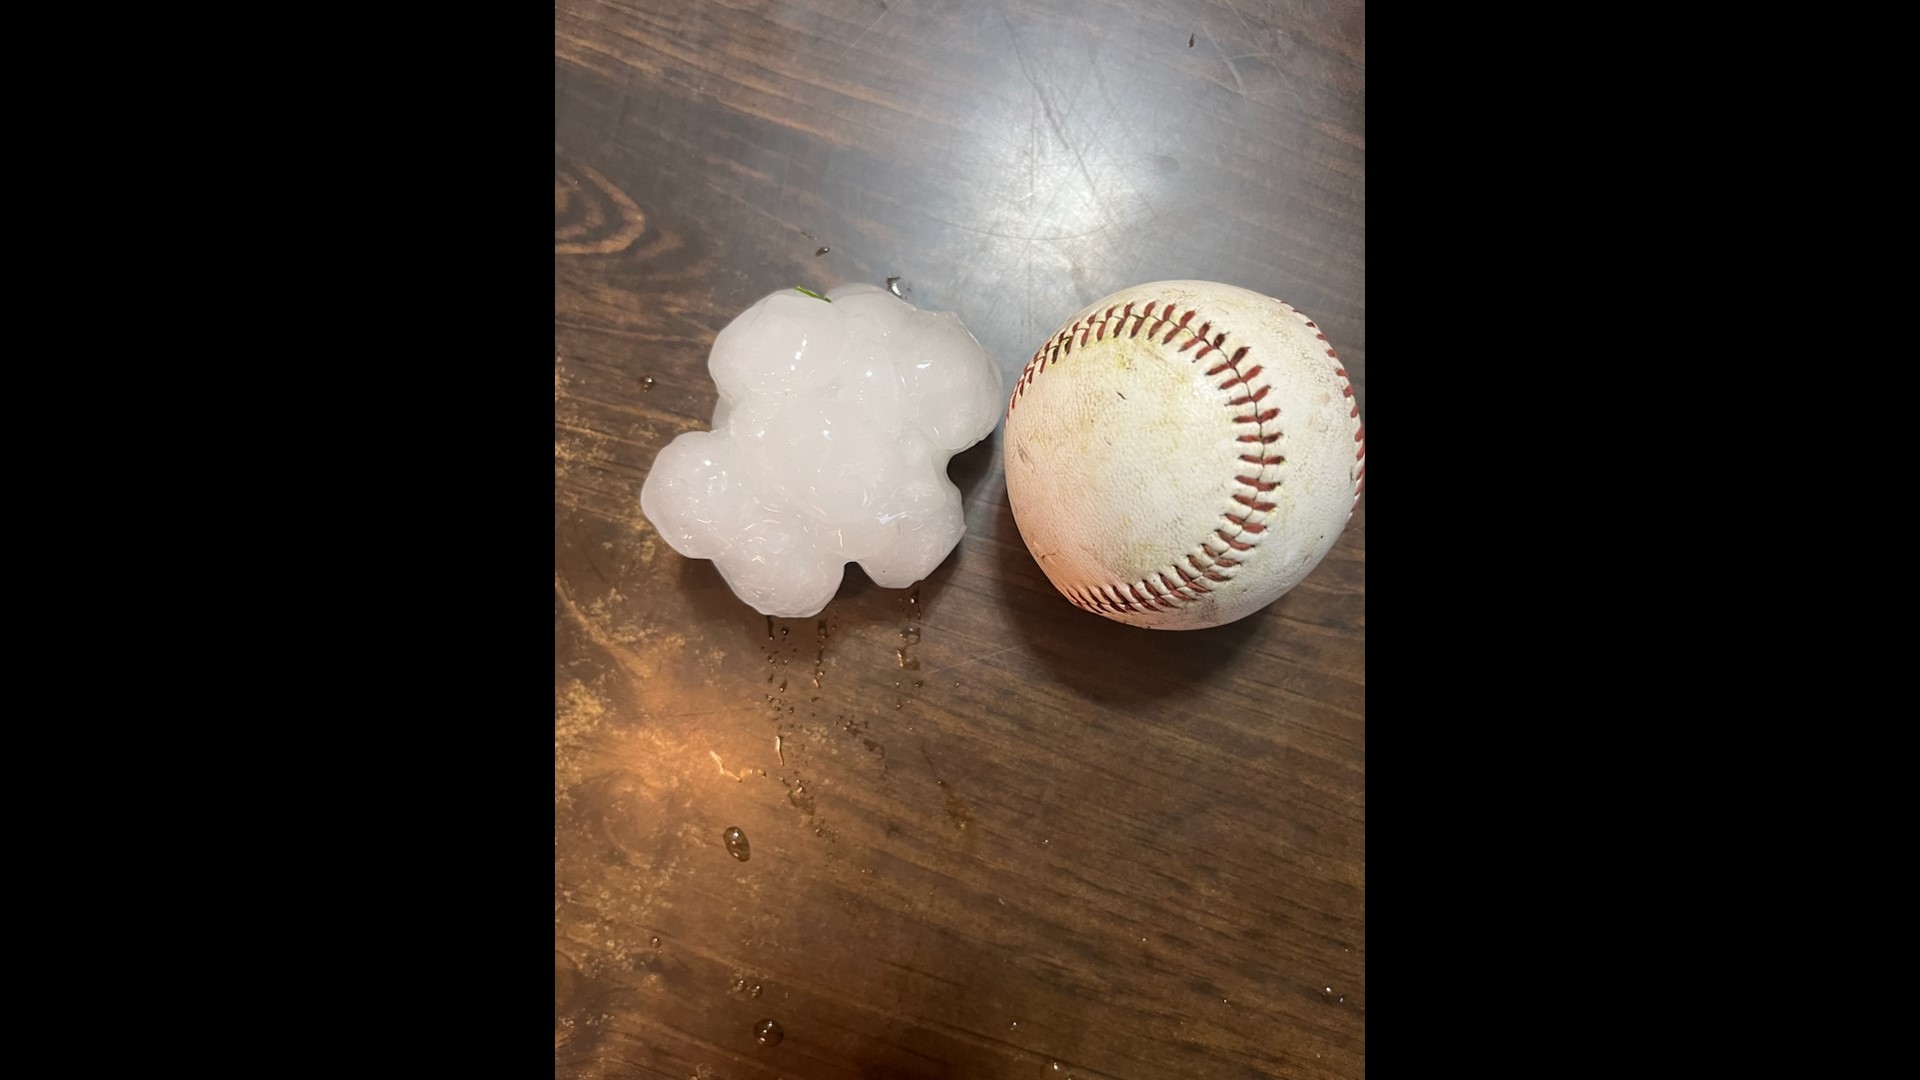 Jack Hart captures video immediately after baseball-sized hail hit Staunton